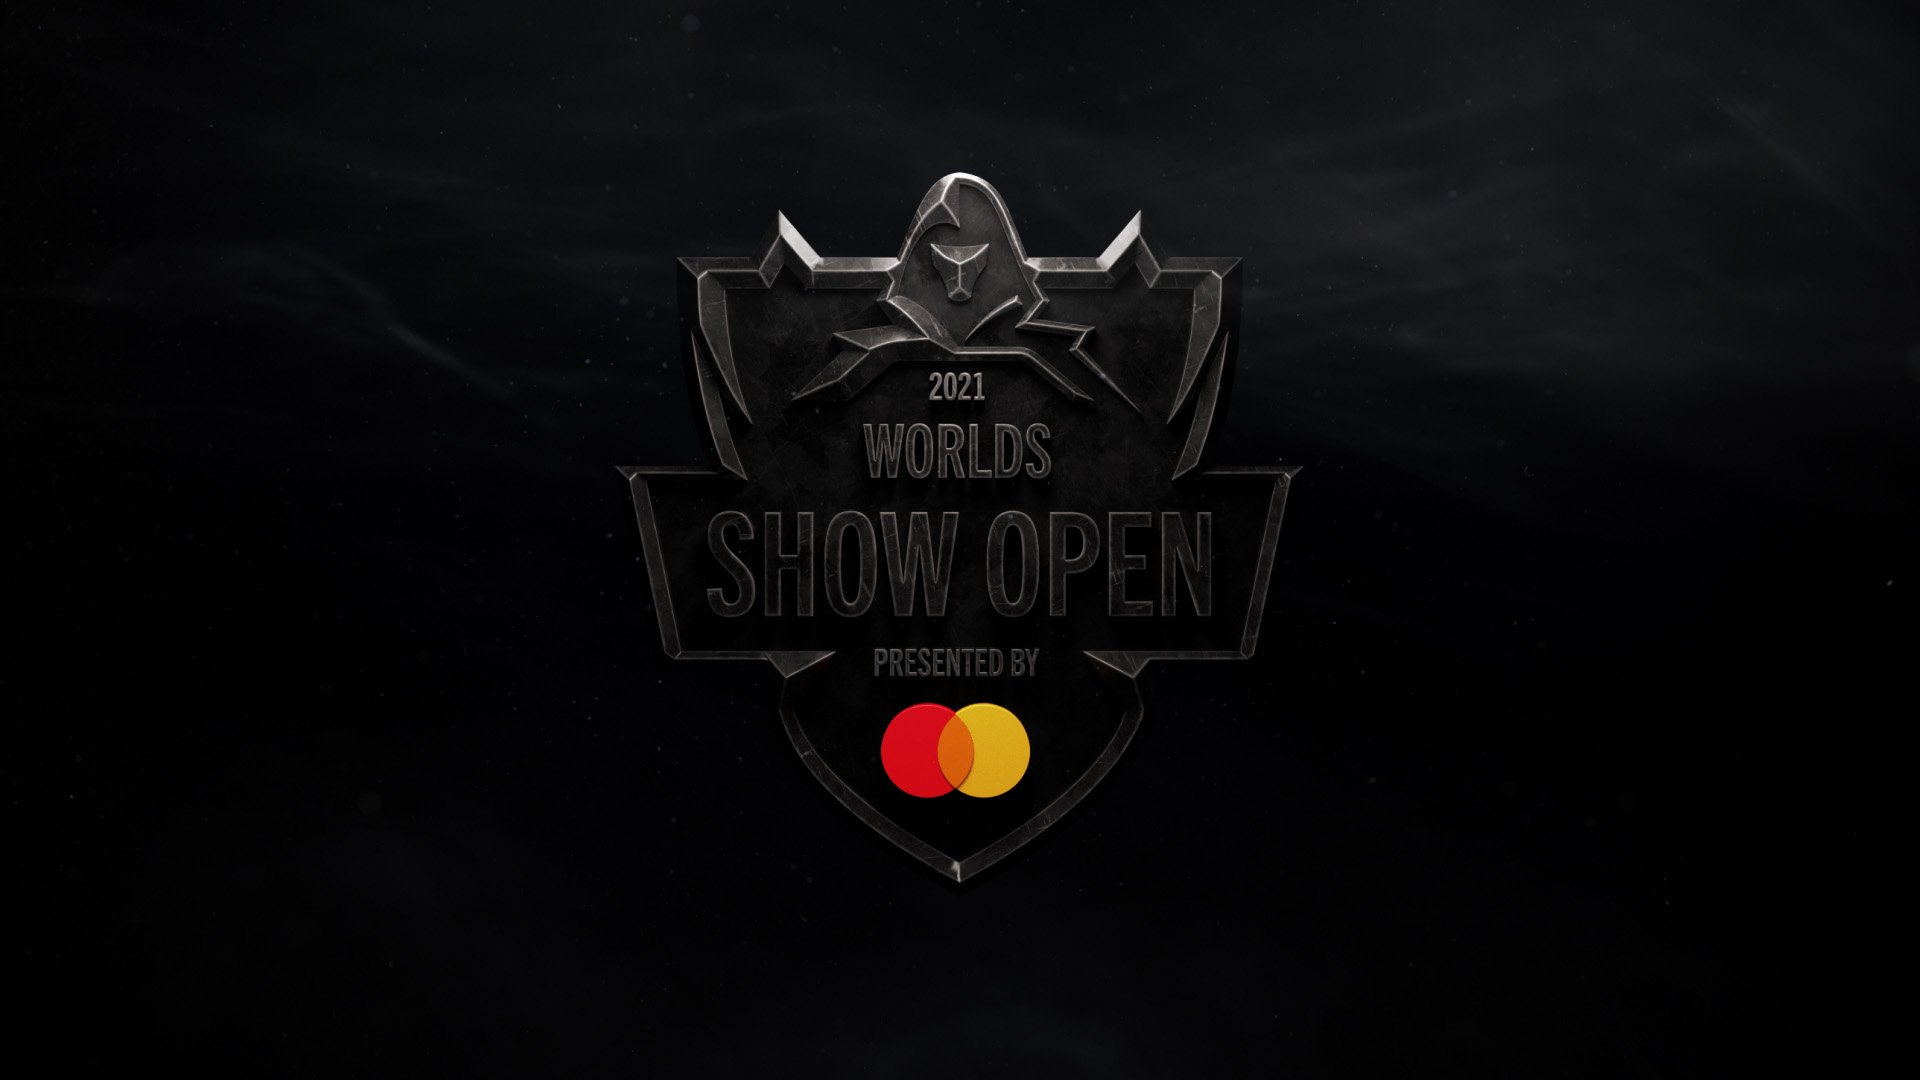 Worlds 2021 - Show Open Logo - Design Exploration